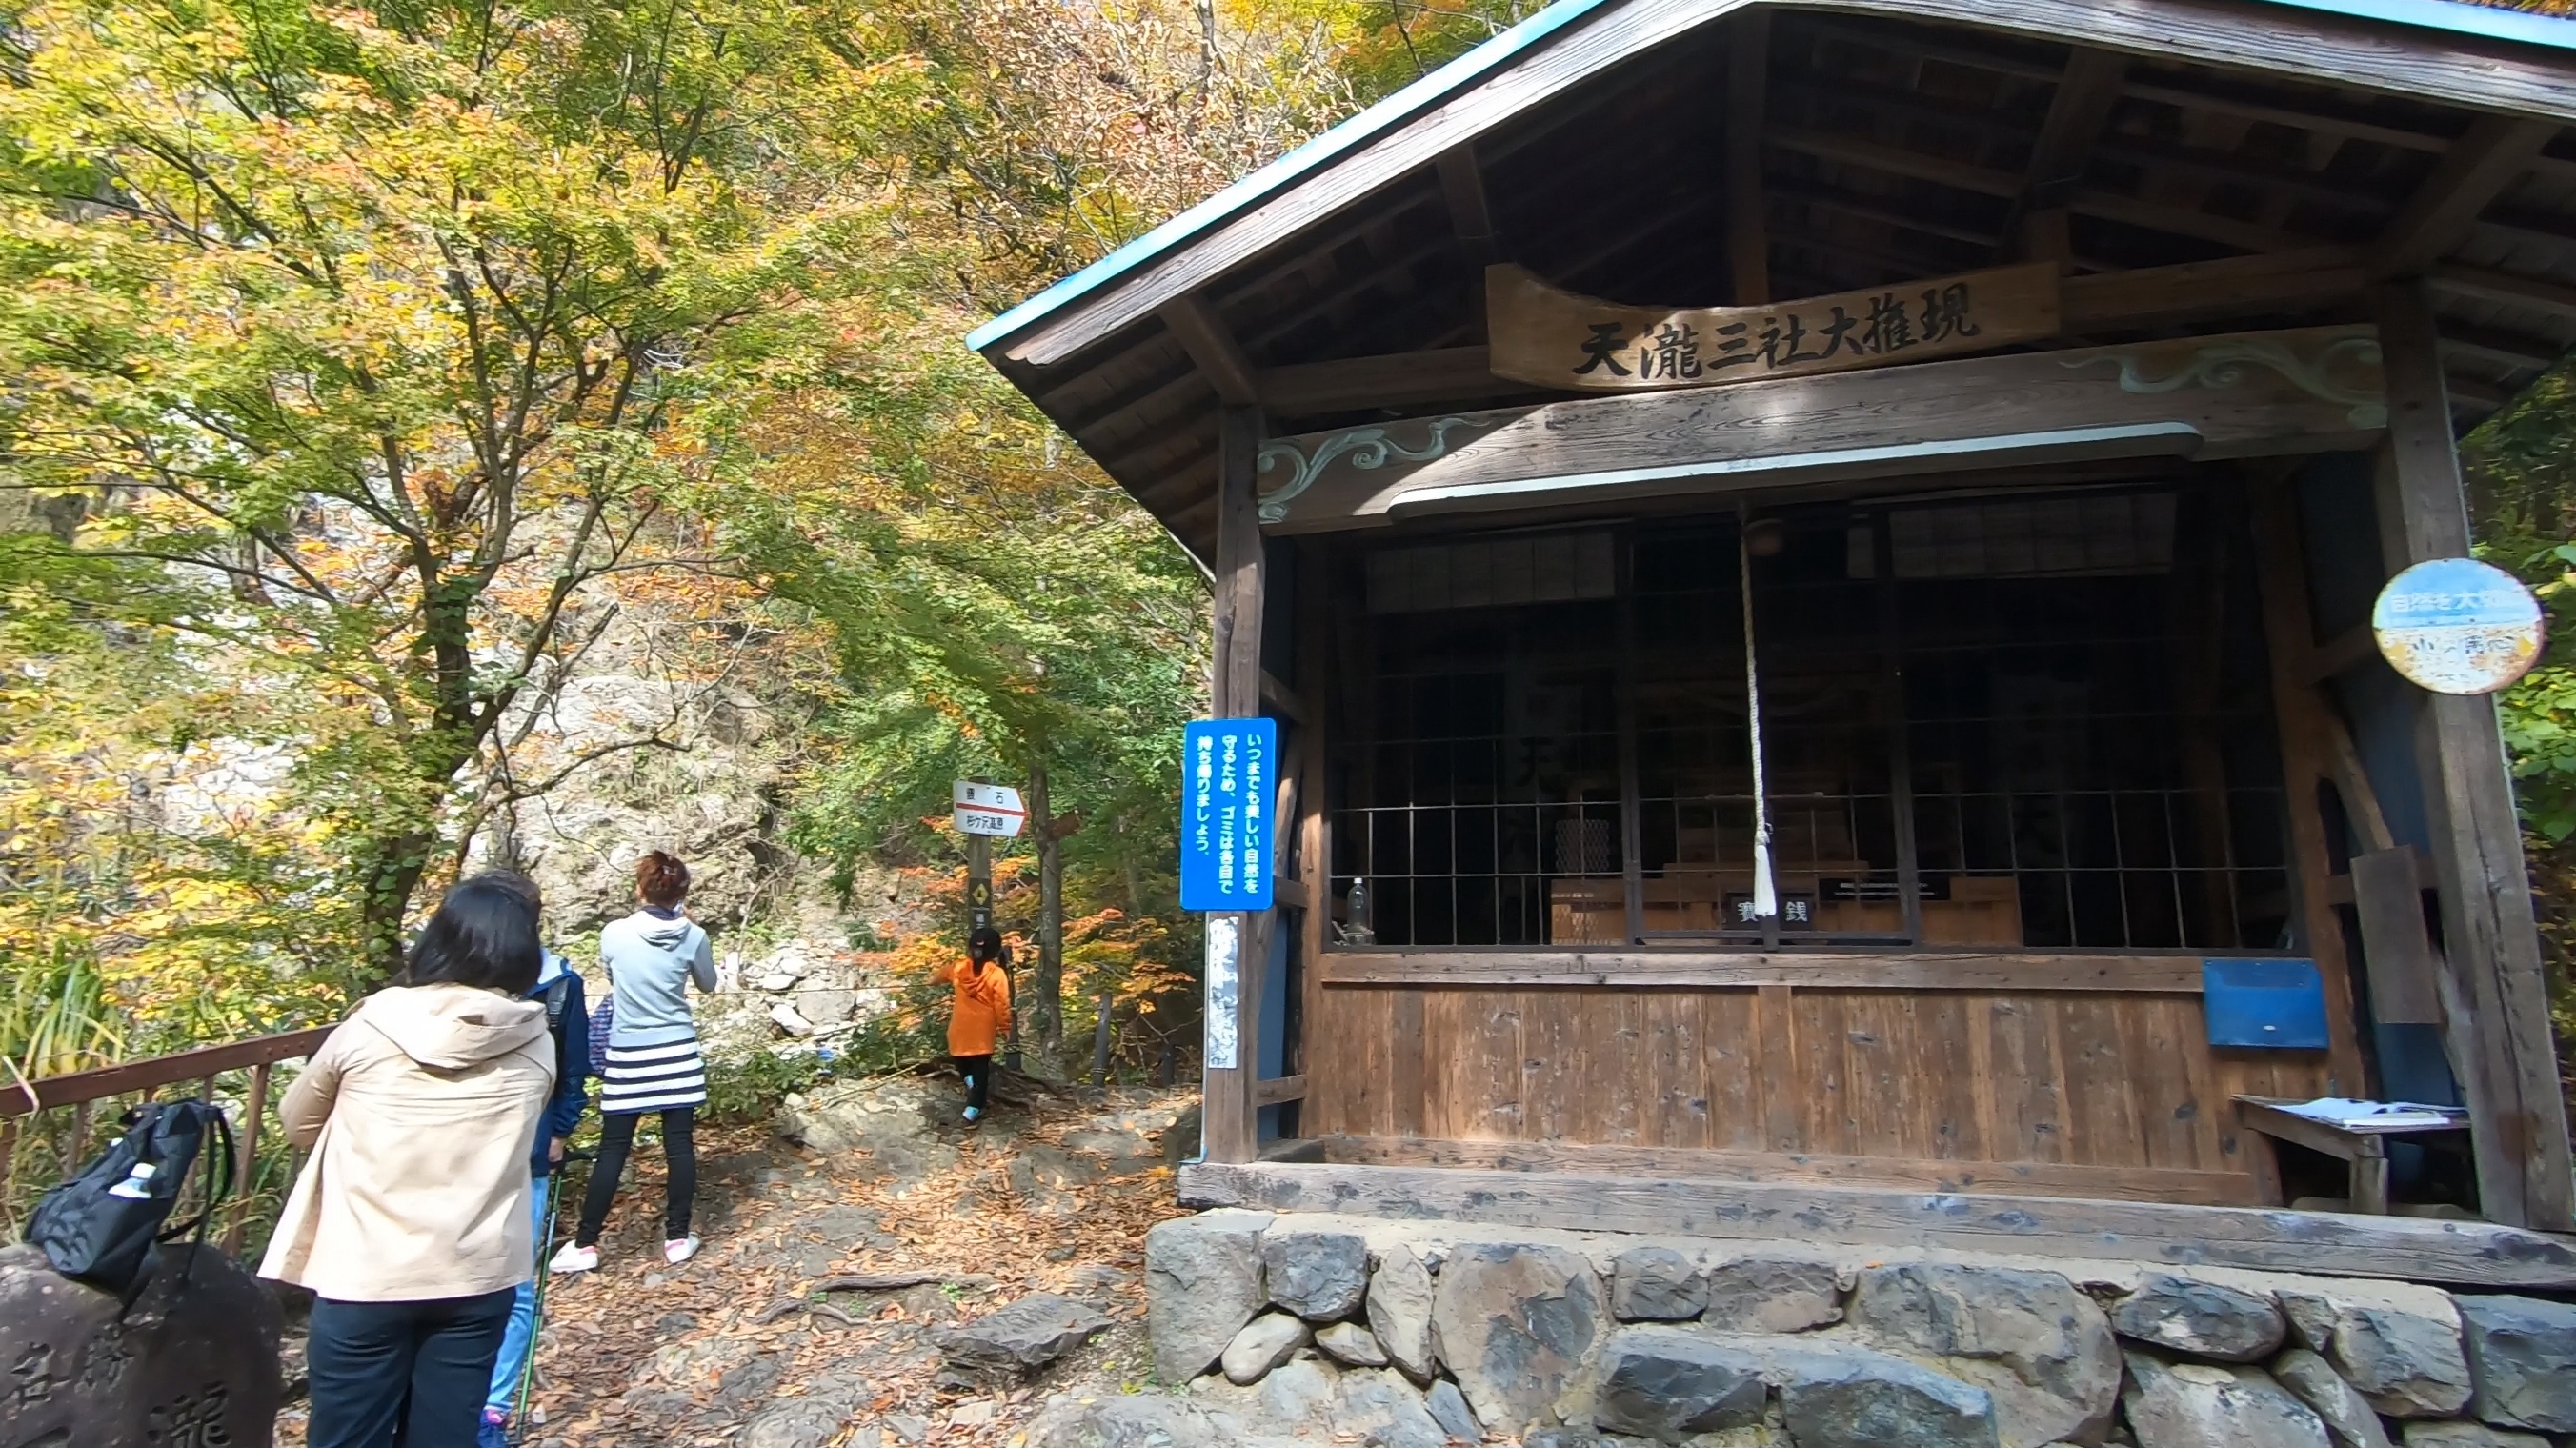 GH011931 兵庫県  天滝 (兵庫県一の落差を誇る紅葉景色の美しい絶景の滝 !撮影した写真の紹介、 アクセス情報や撮影ポイントなど!)　